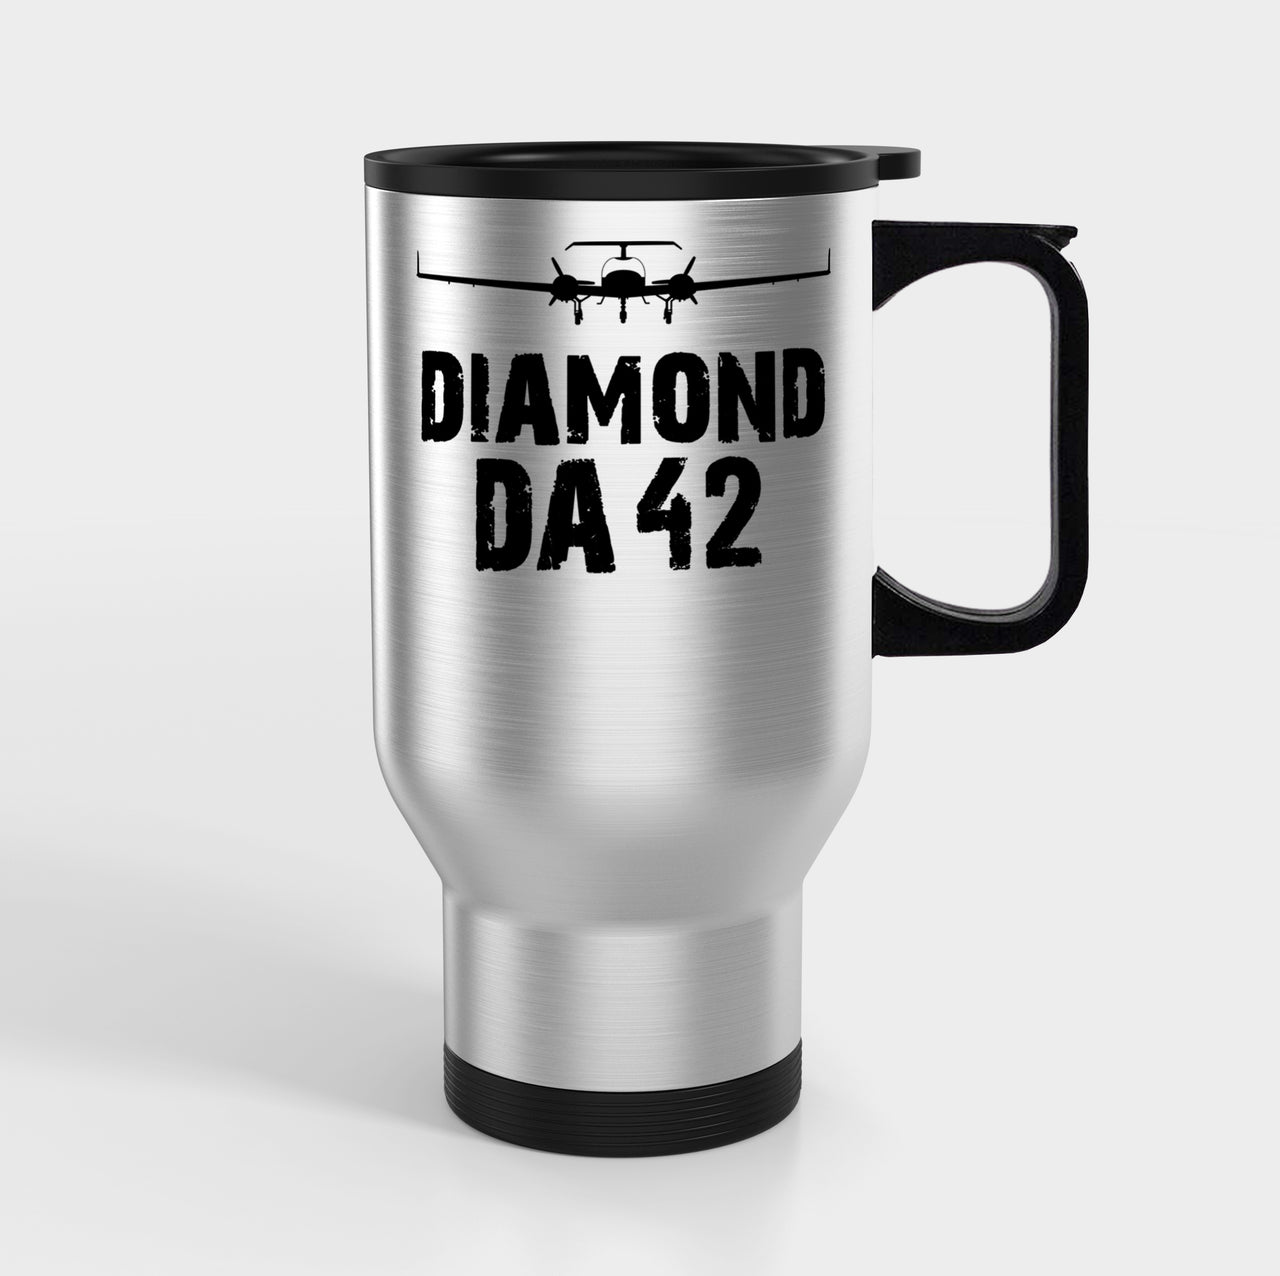 Diamond DA42 & Plane Designed Travel Mugs (With Holder)